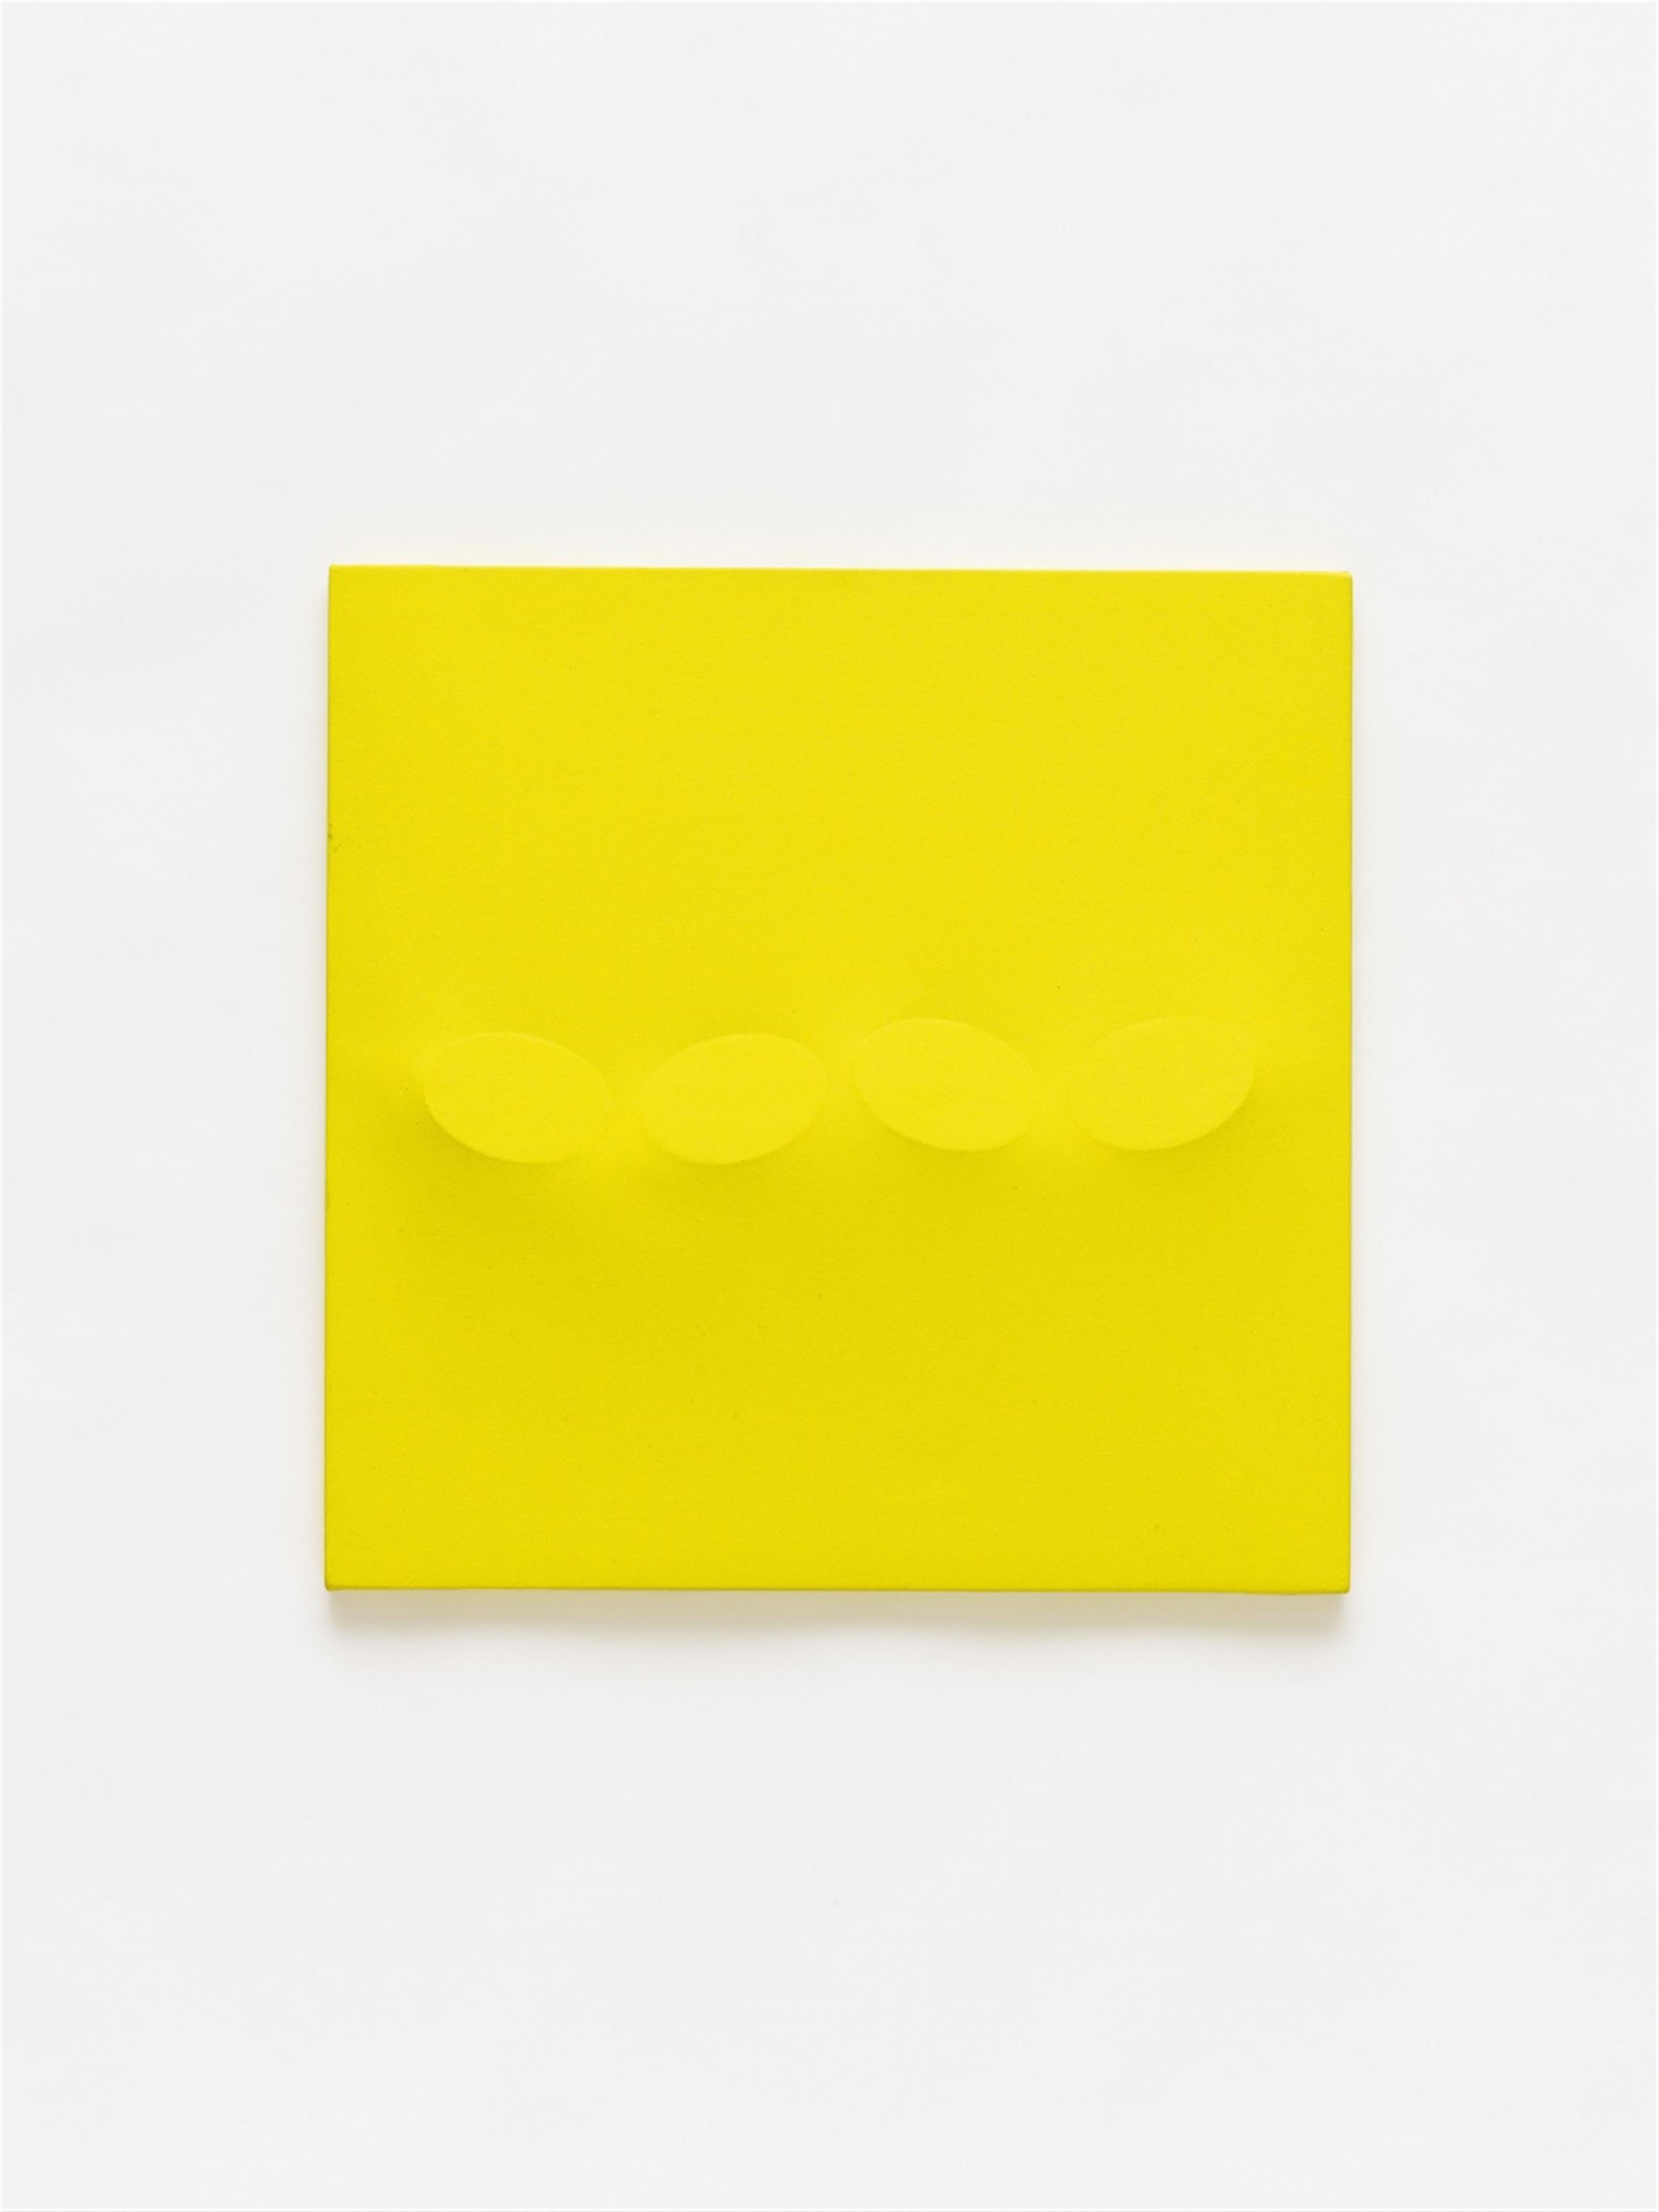 Turi Simeti - Untitled (quattro ovali gialli) - image-1